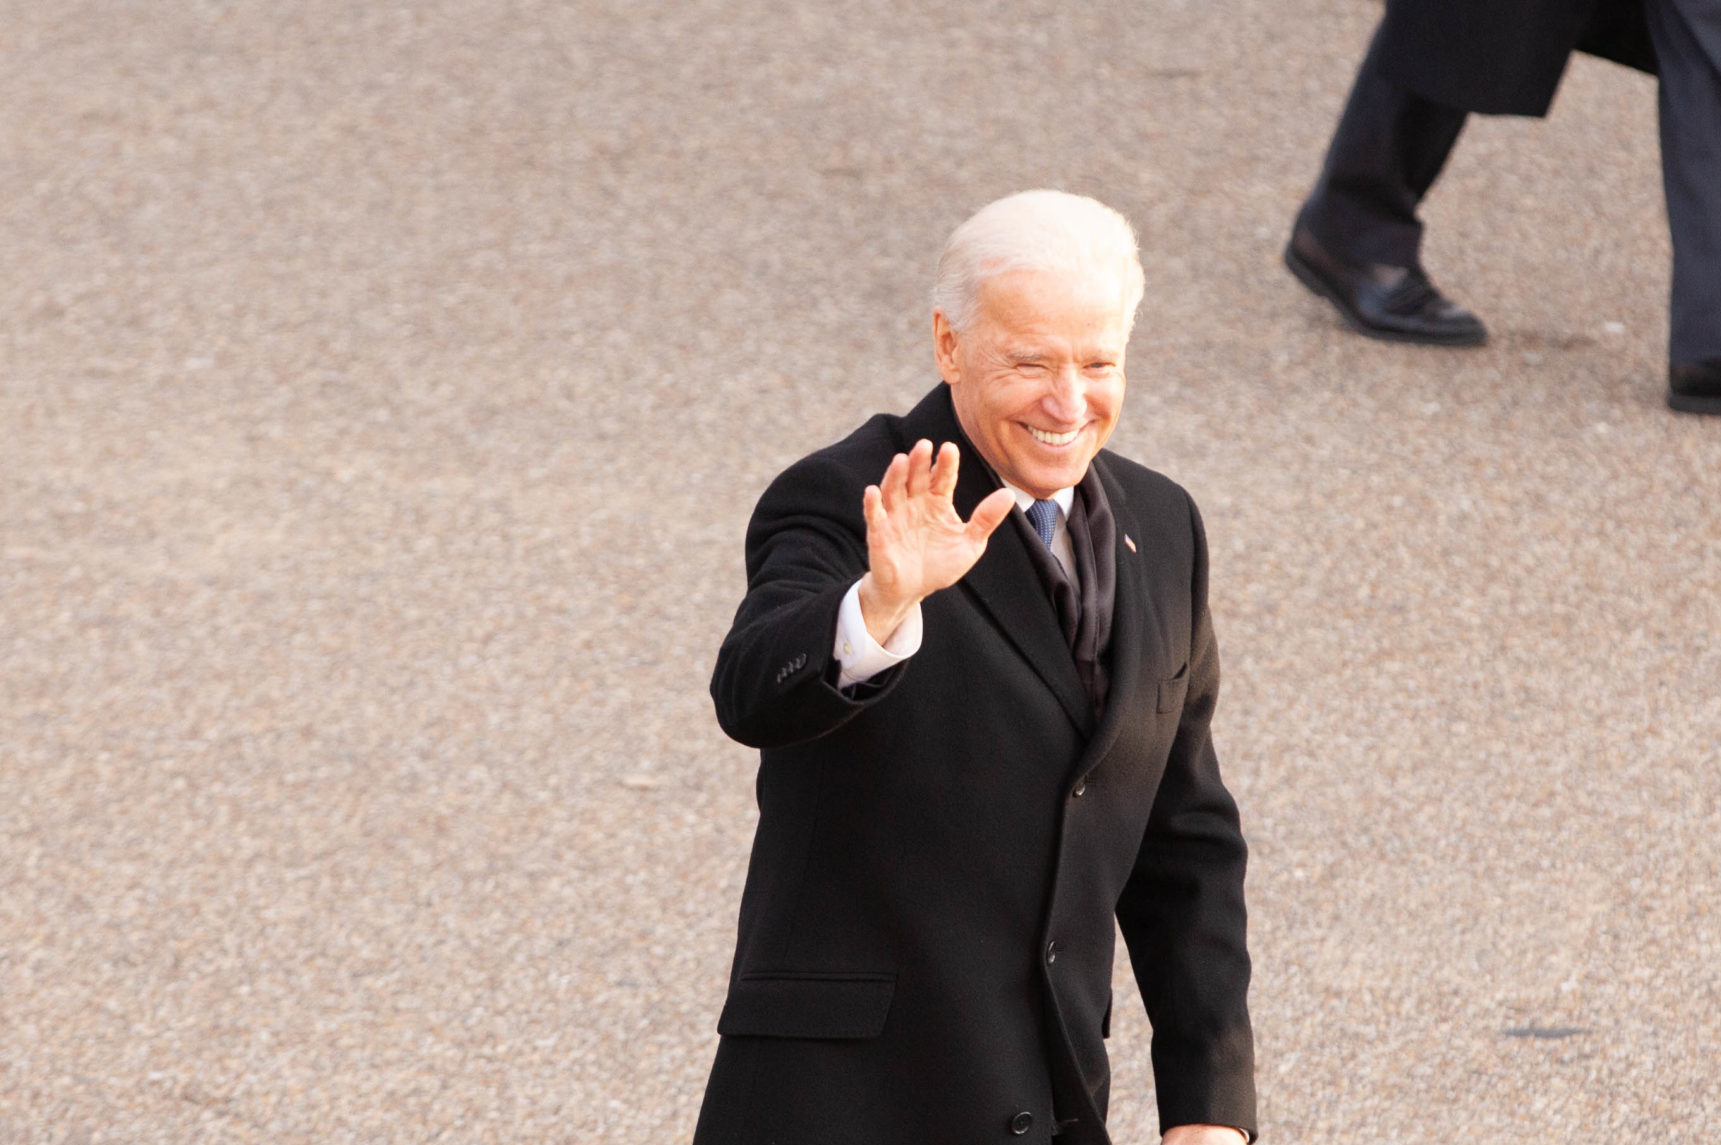 Vice President of the United States Joe Biden